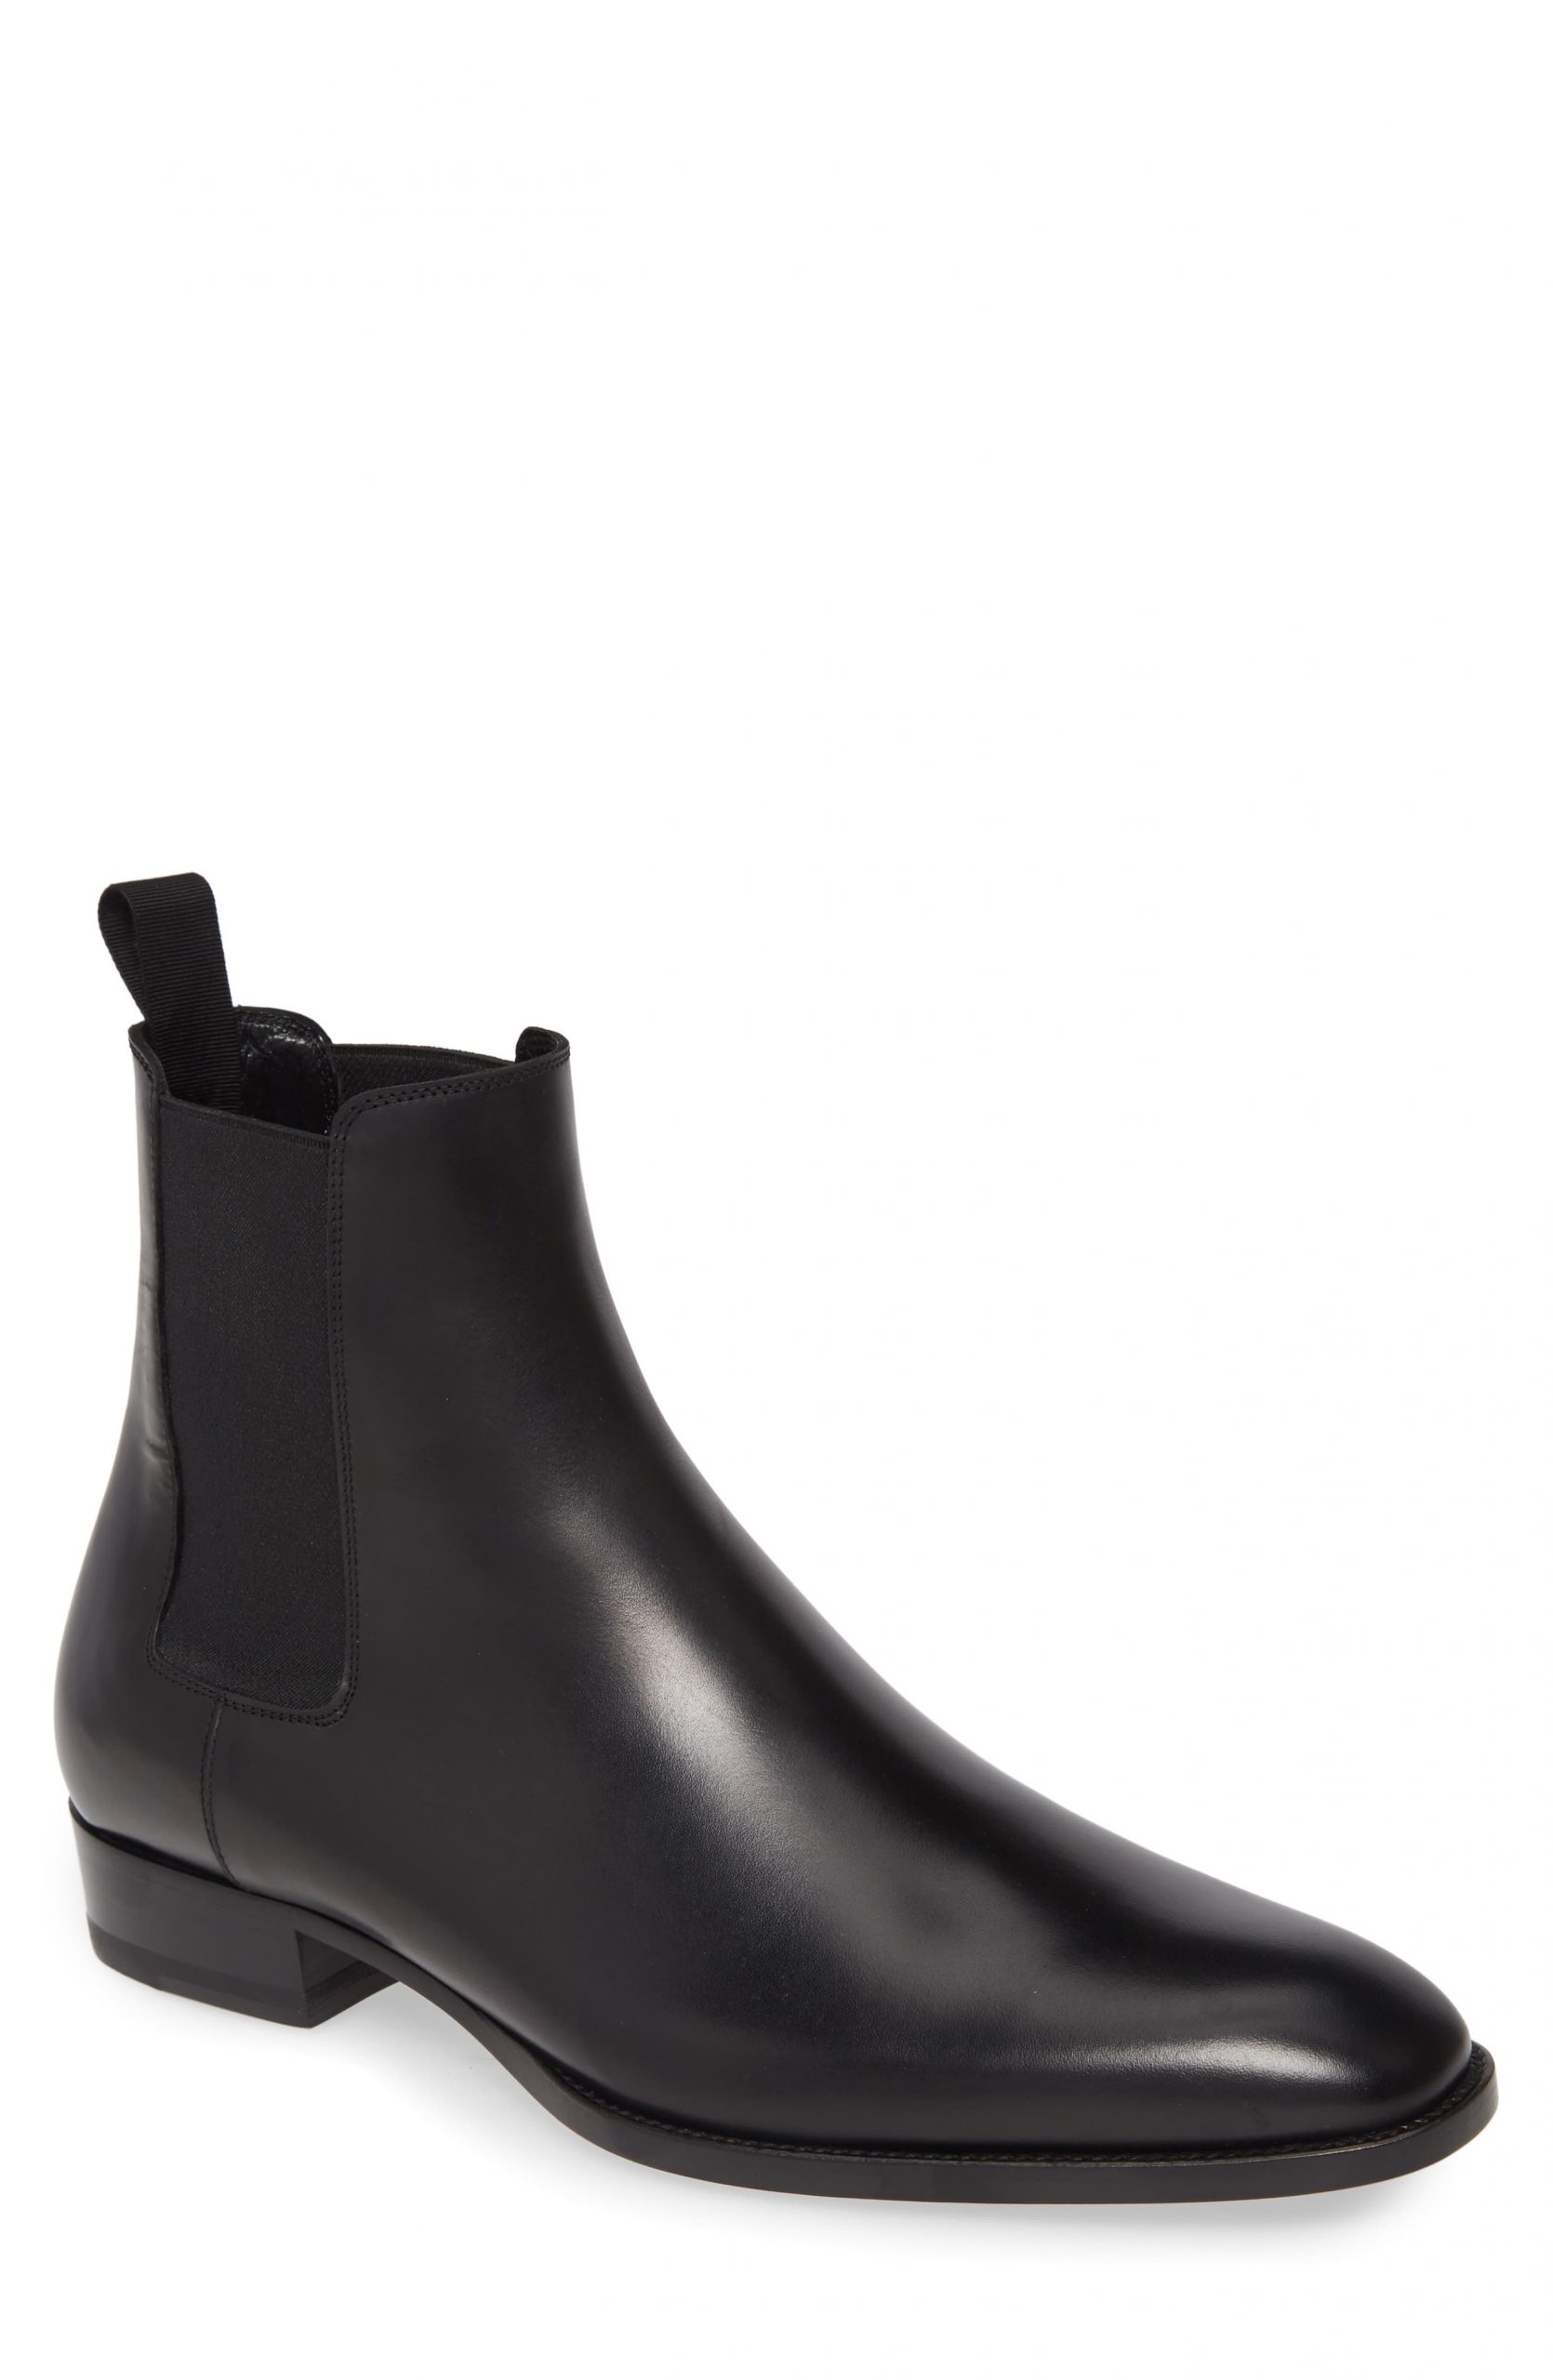 Men’s Saint Laurent Chelsea Boot, Size 8US - Black | The Fashionisto